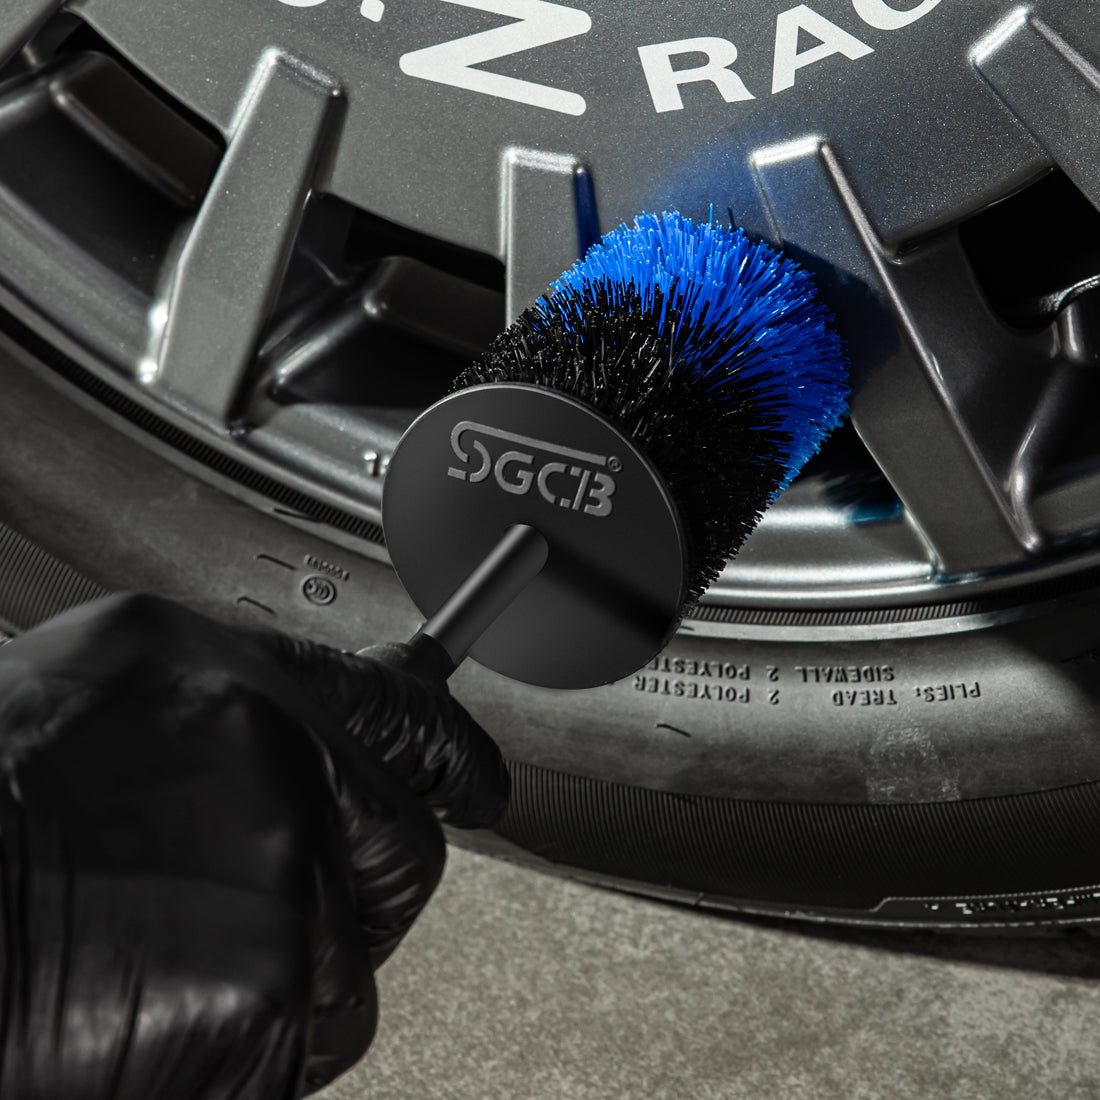 Buy Lovesole Car wash brush For wheels Soft wheel brush Tire